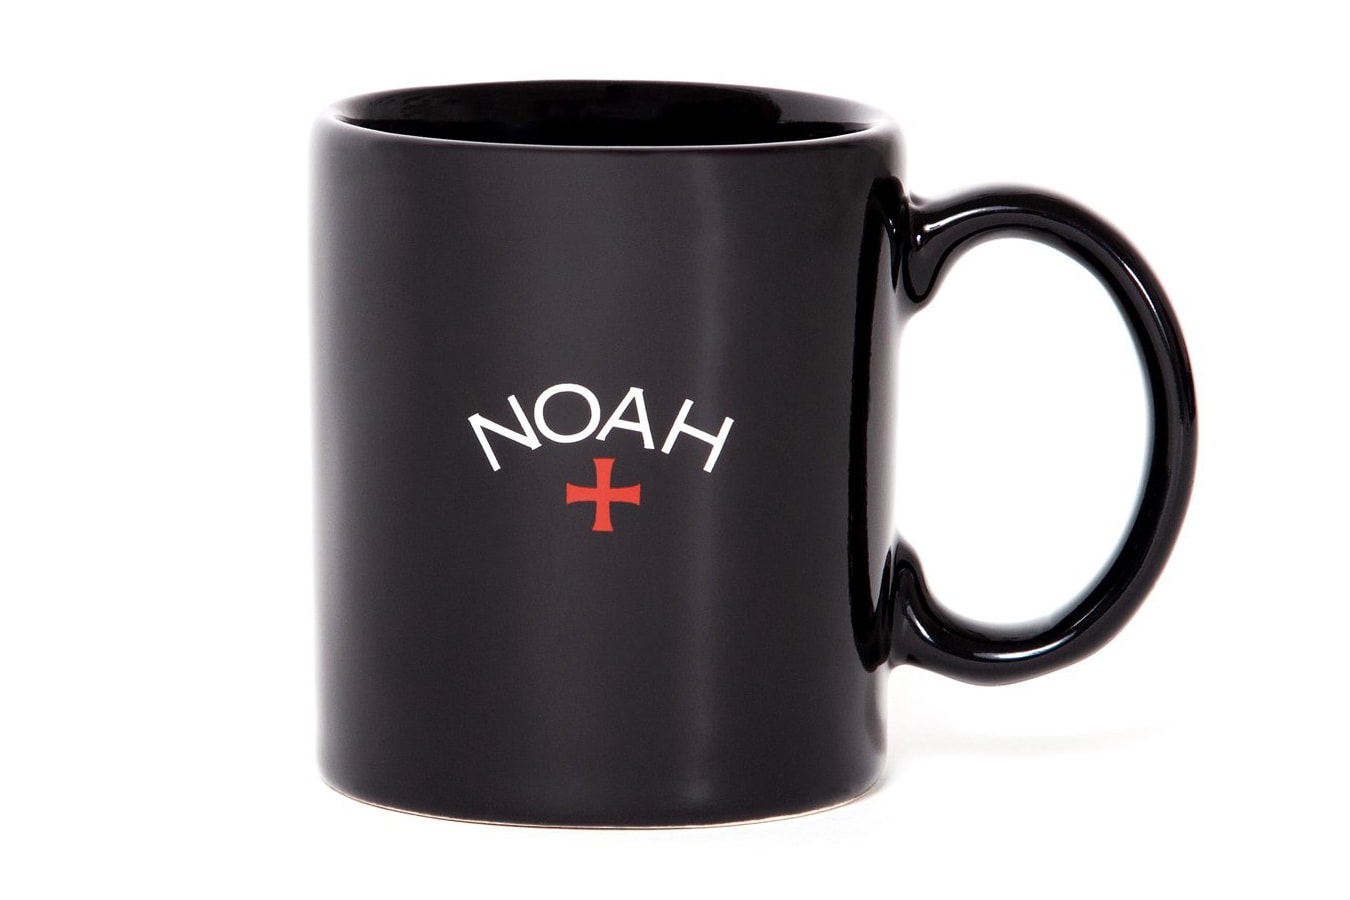 NOAH 再度聯合 Keith Haring 基金會發佈「Peace on Earth」聯名系列 